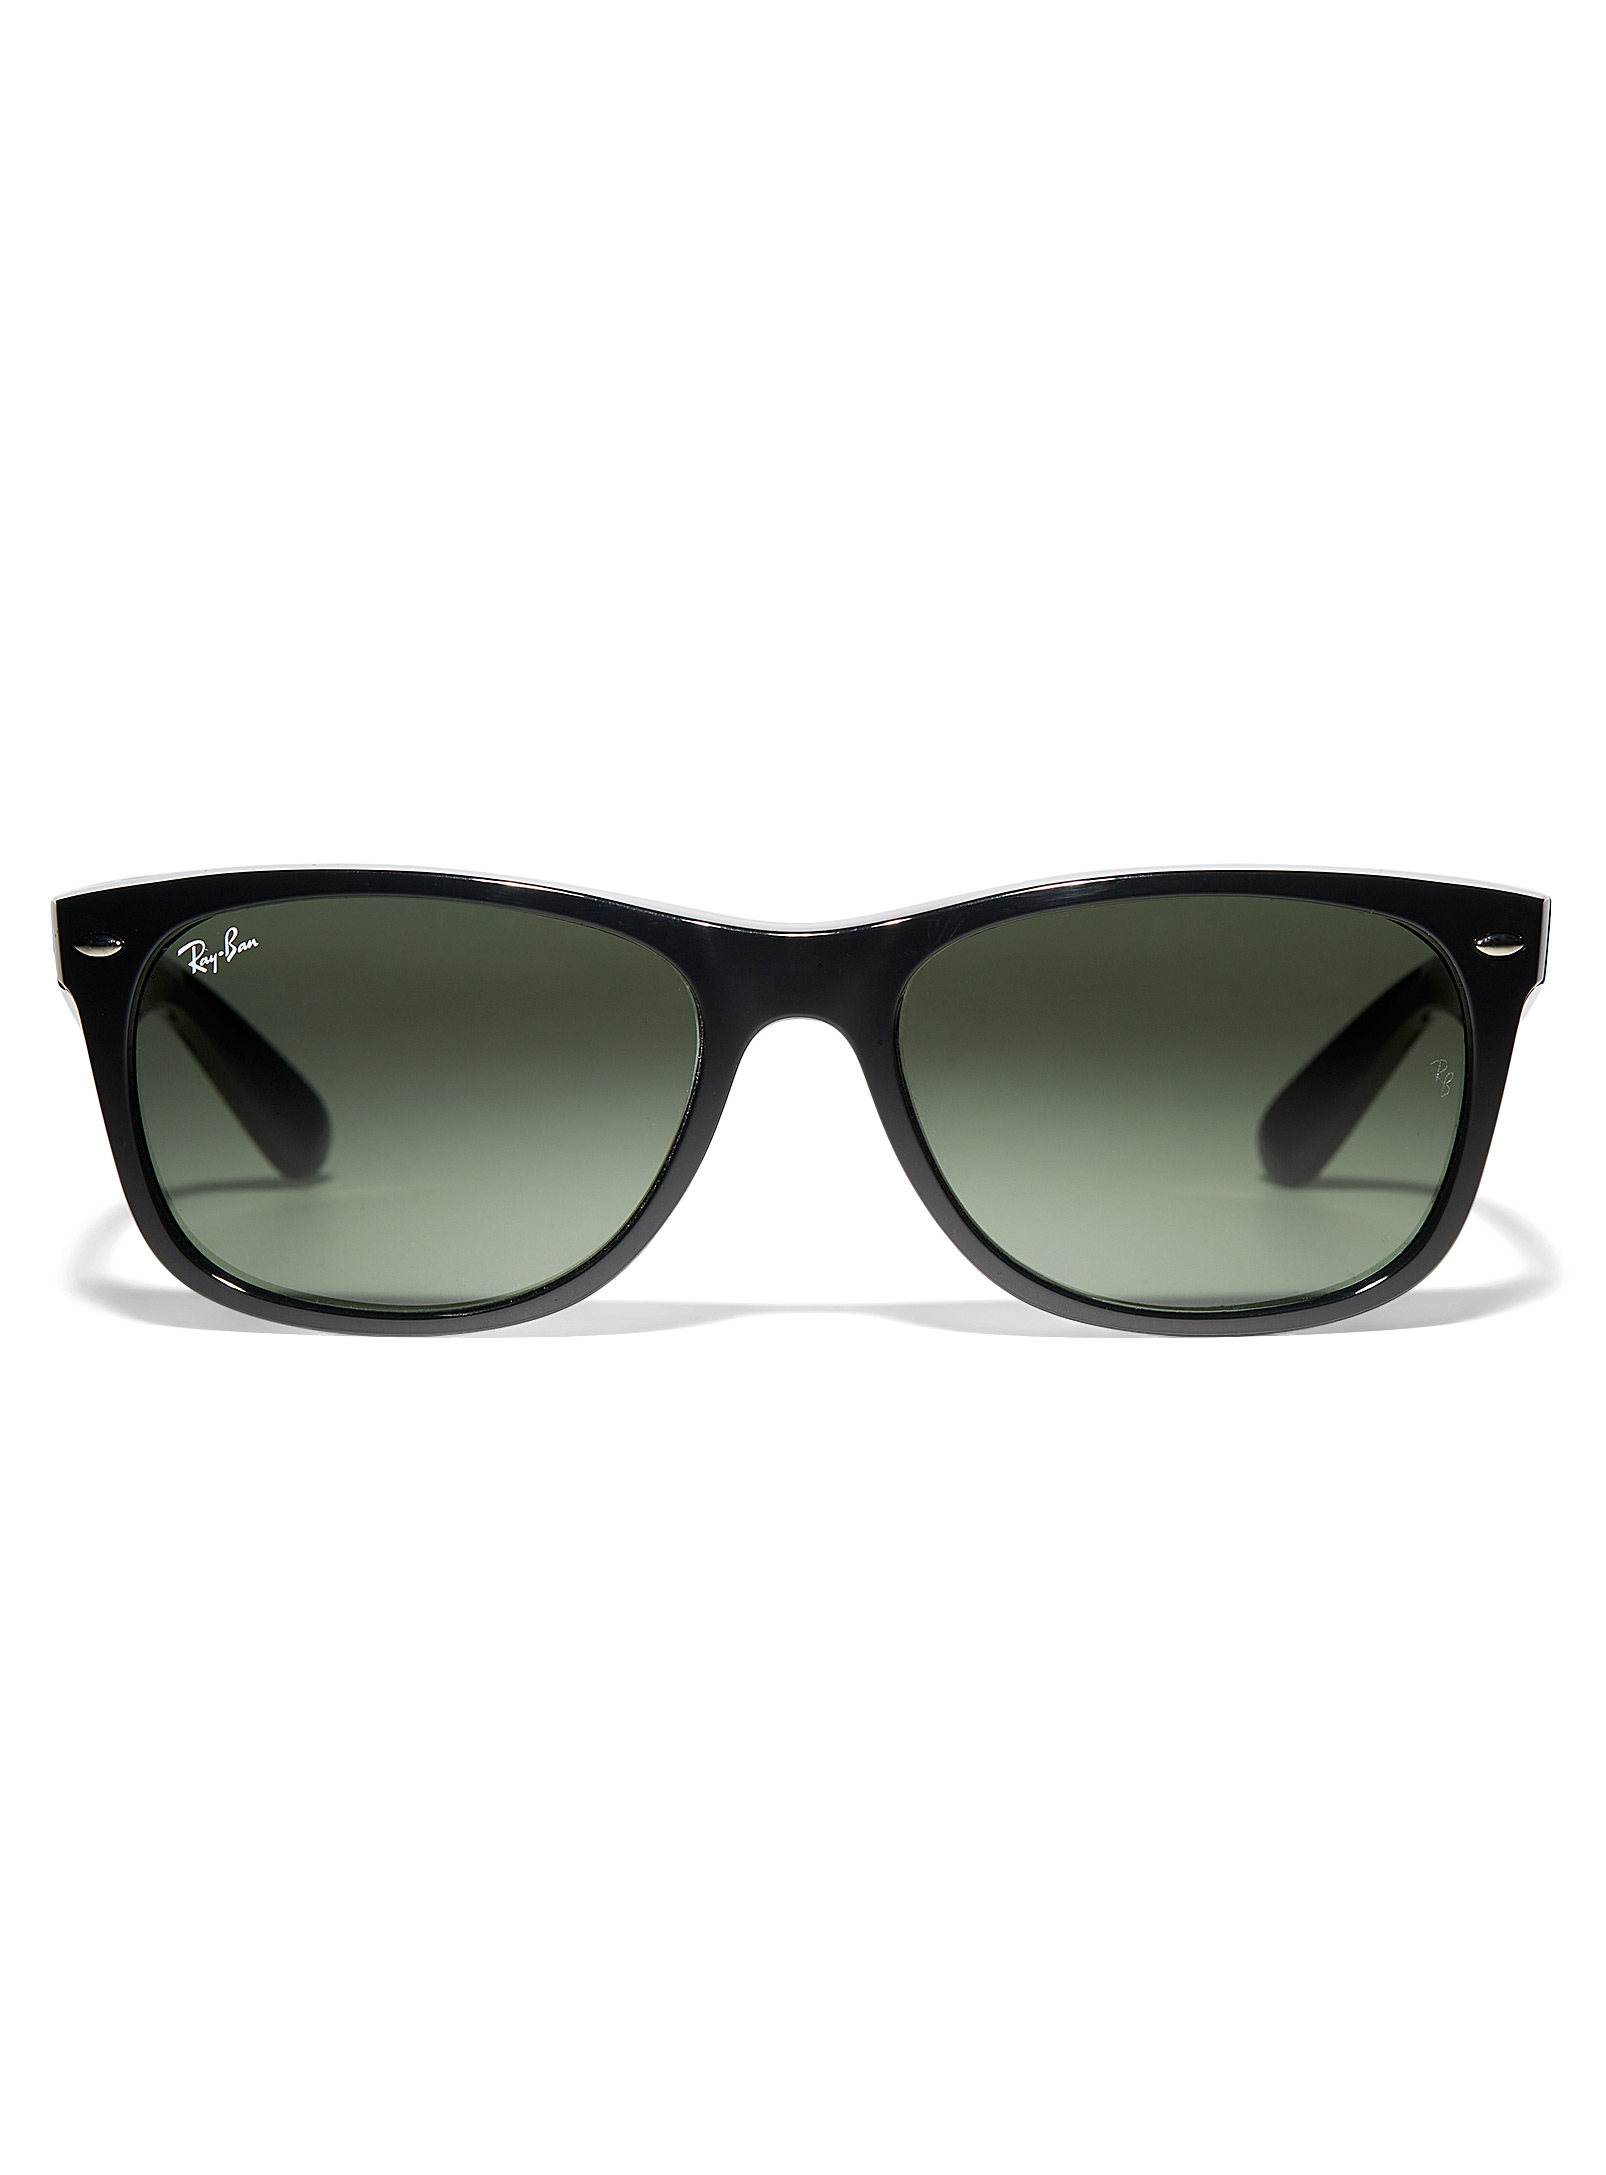 Ray-Ban - Men's New Wayfarer rectangular sunglasses